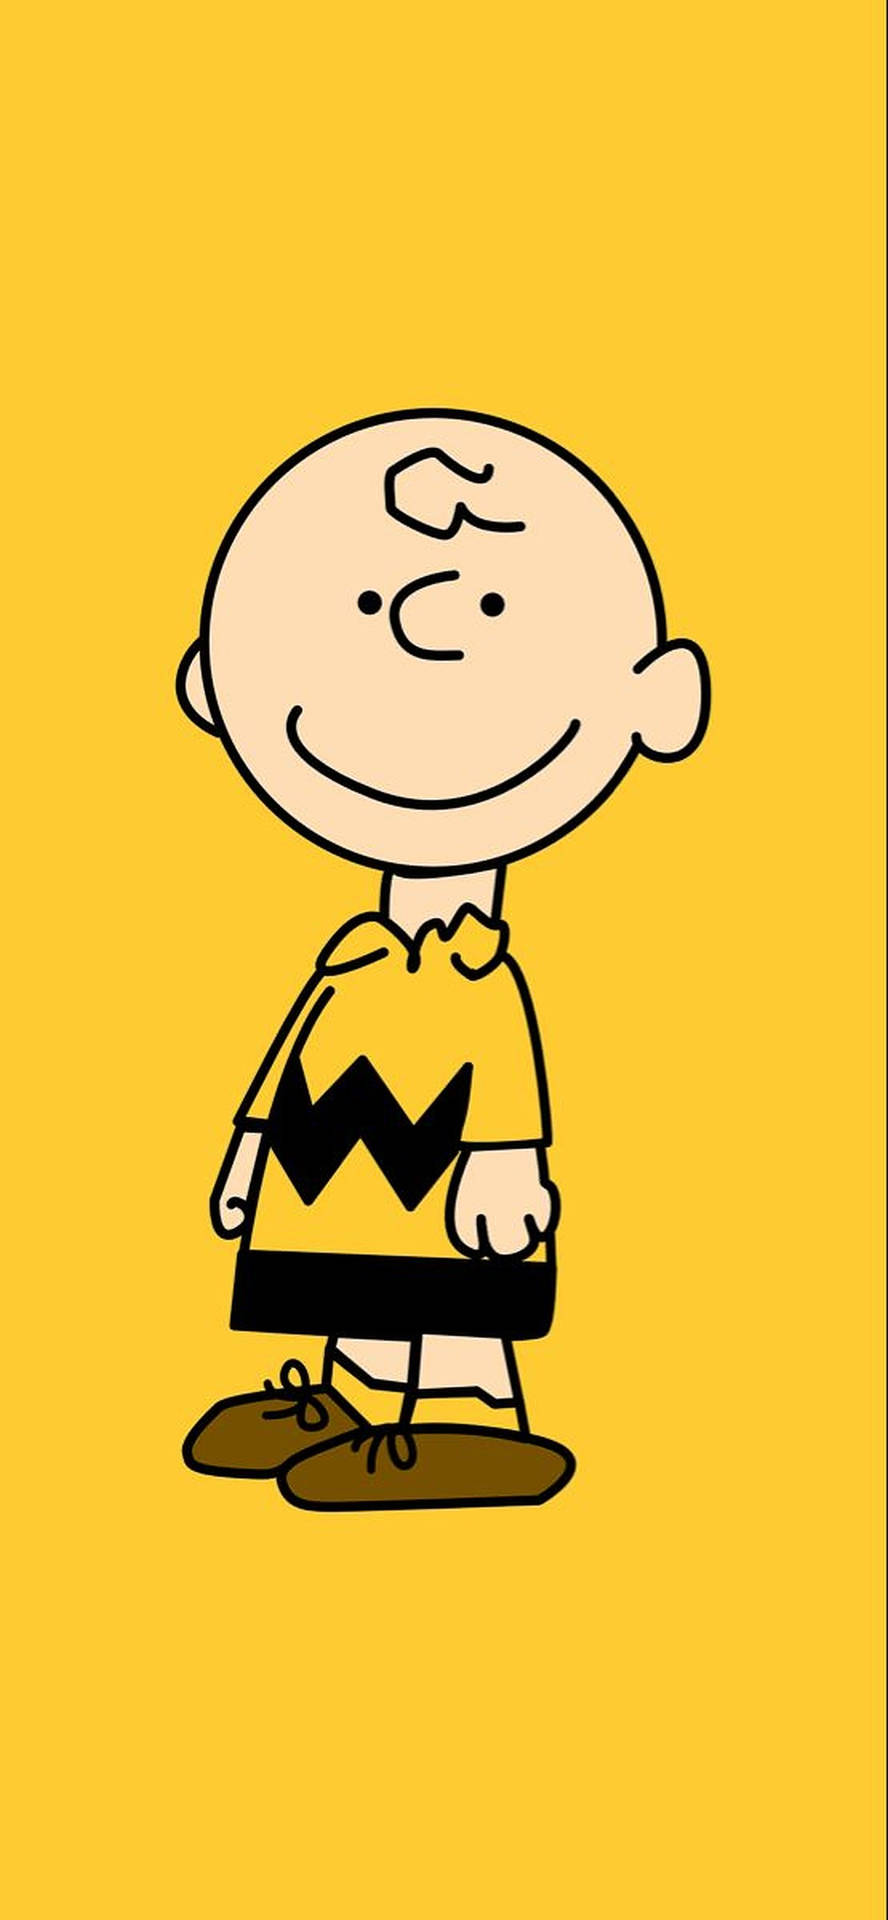 Charlie Brown Wallpaper